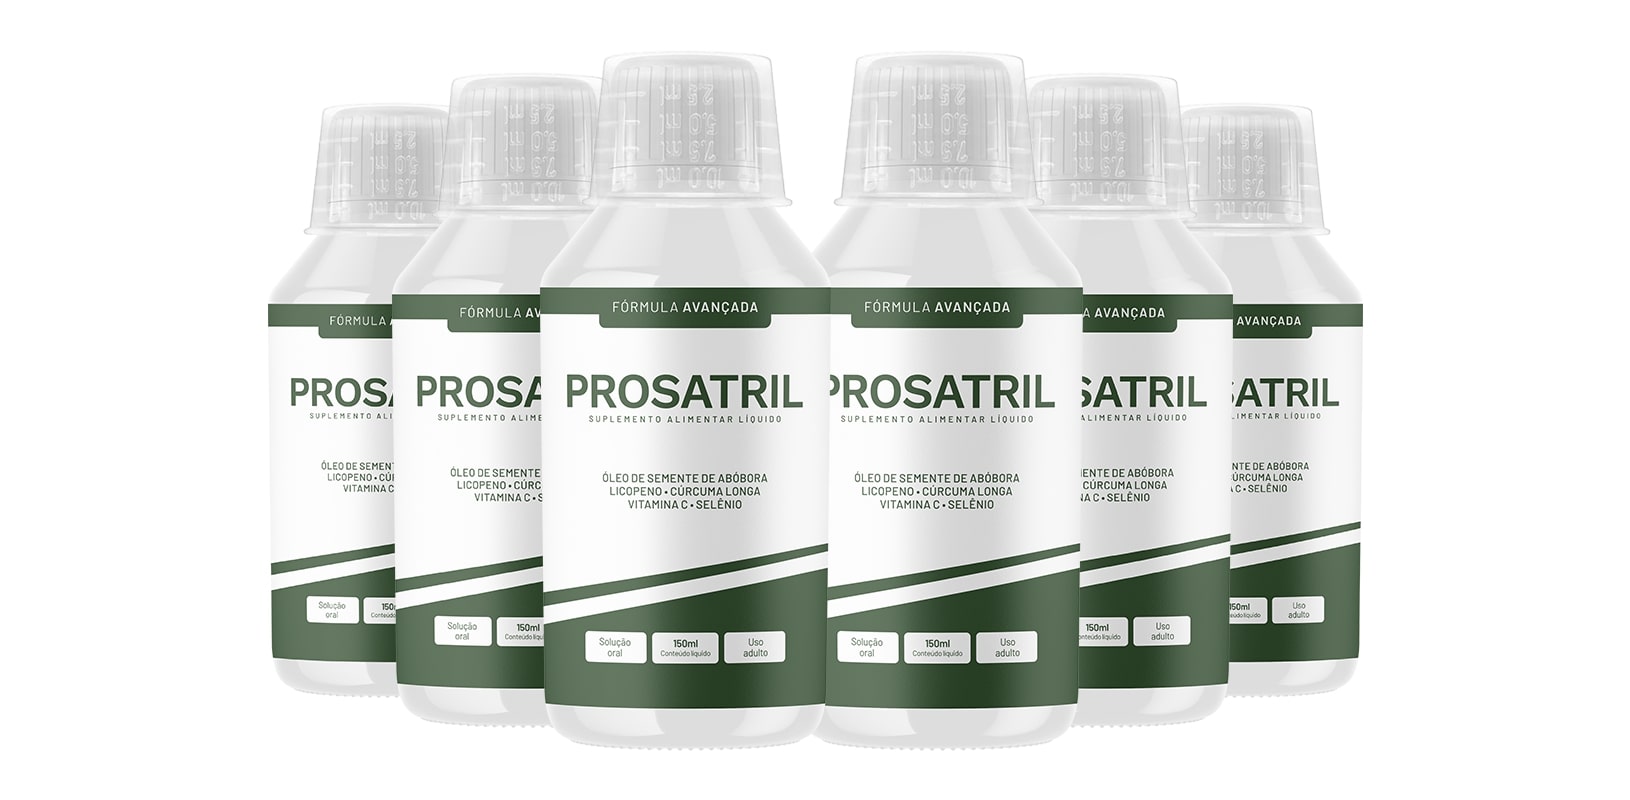 Prosatril